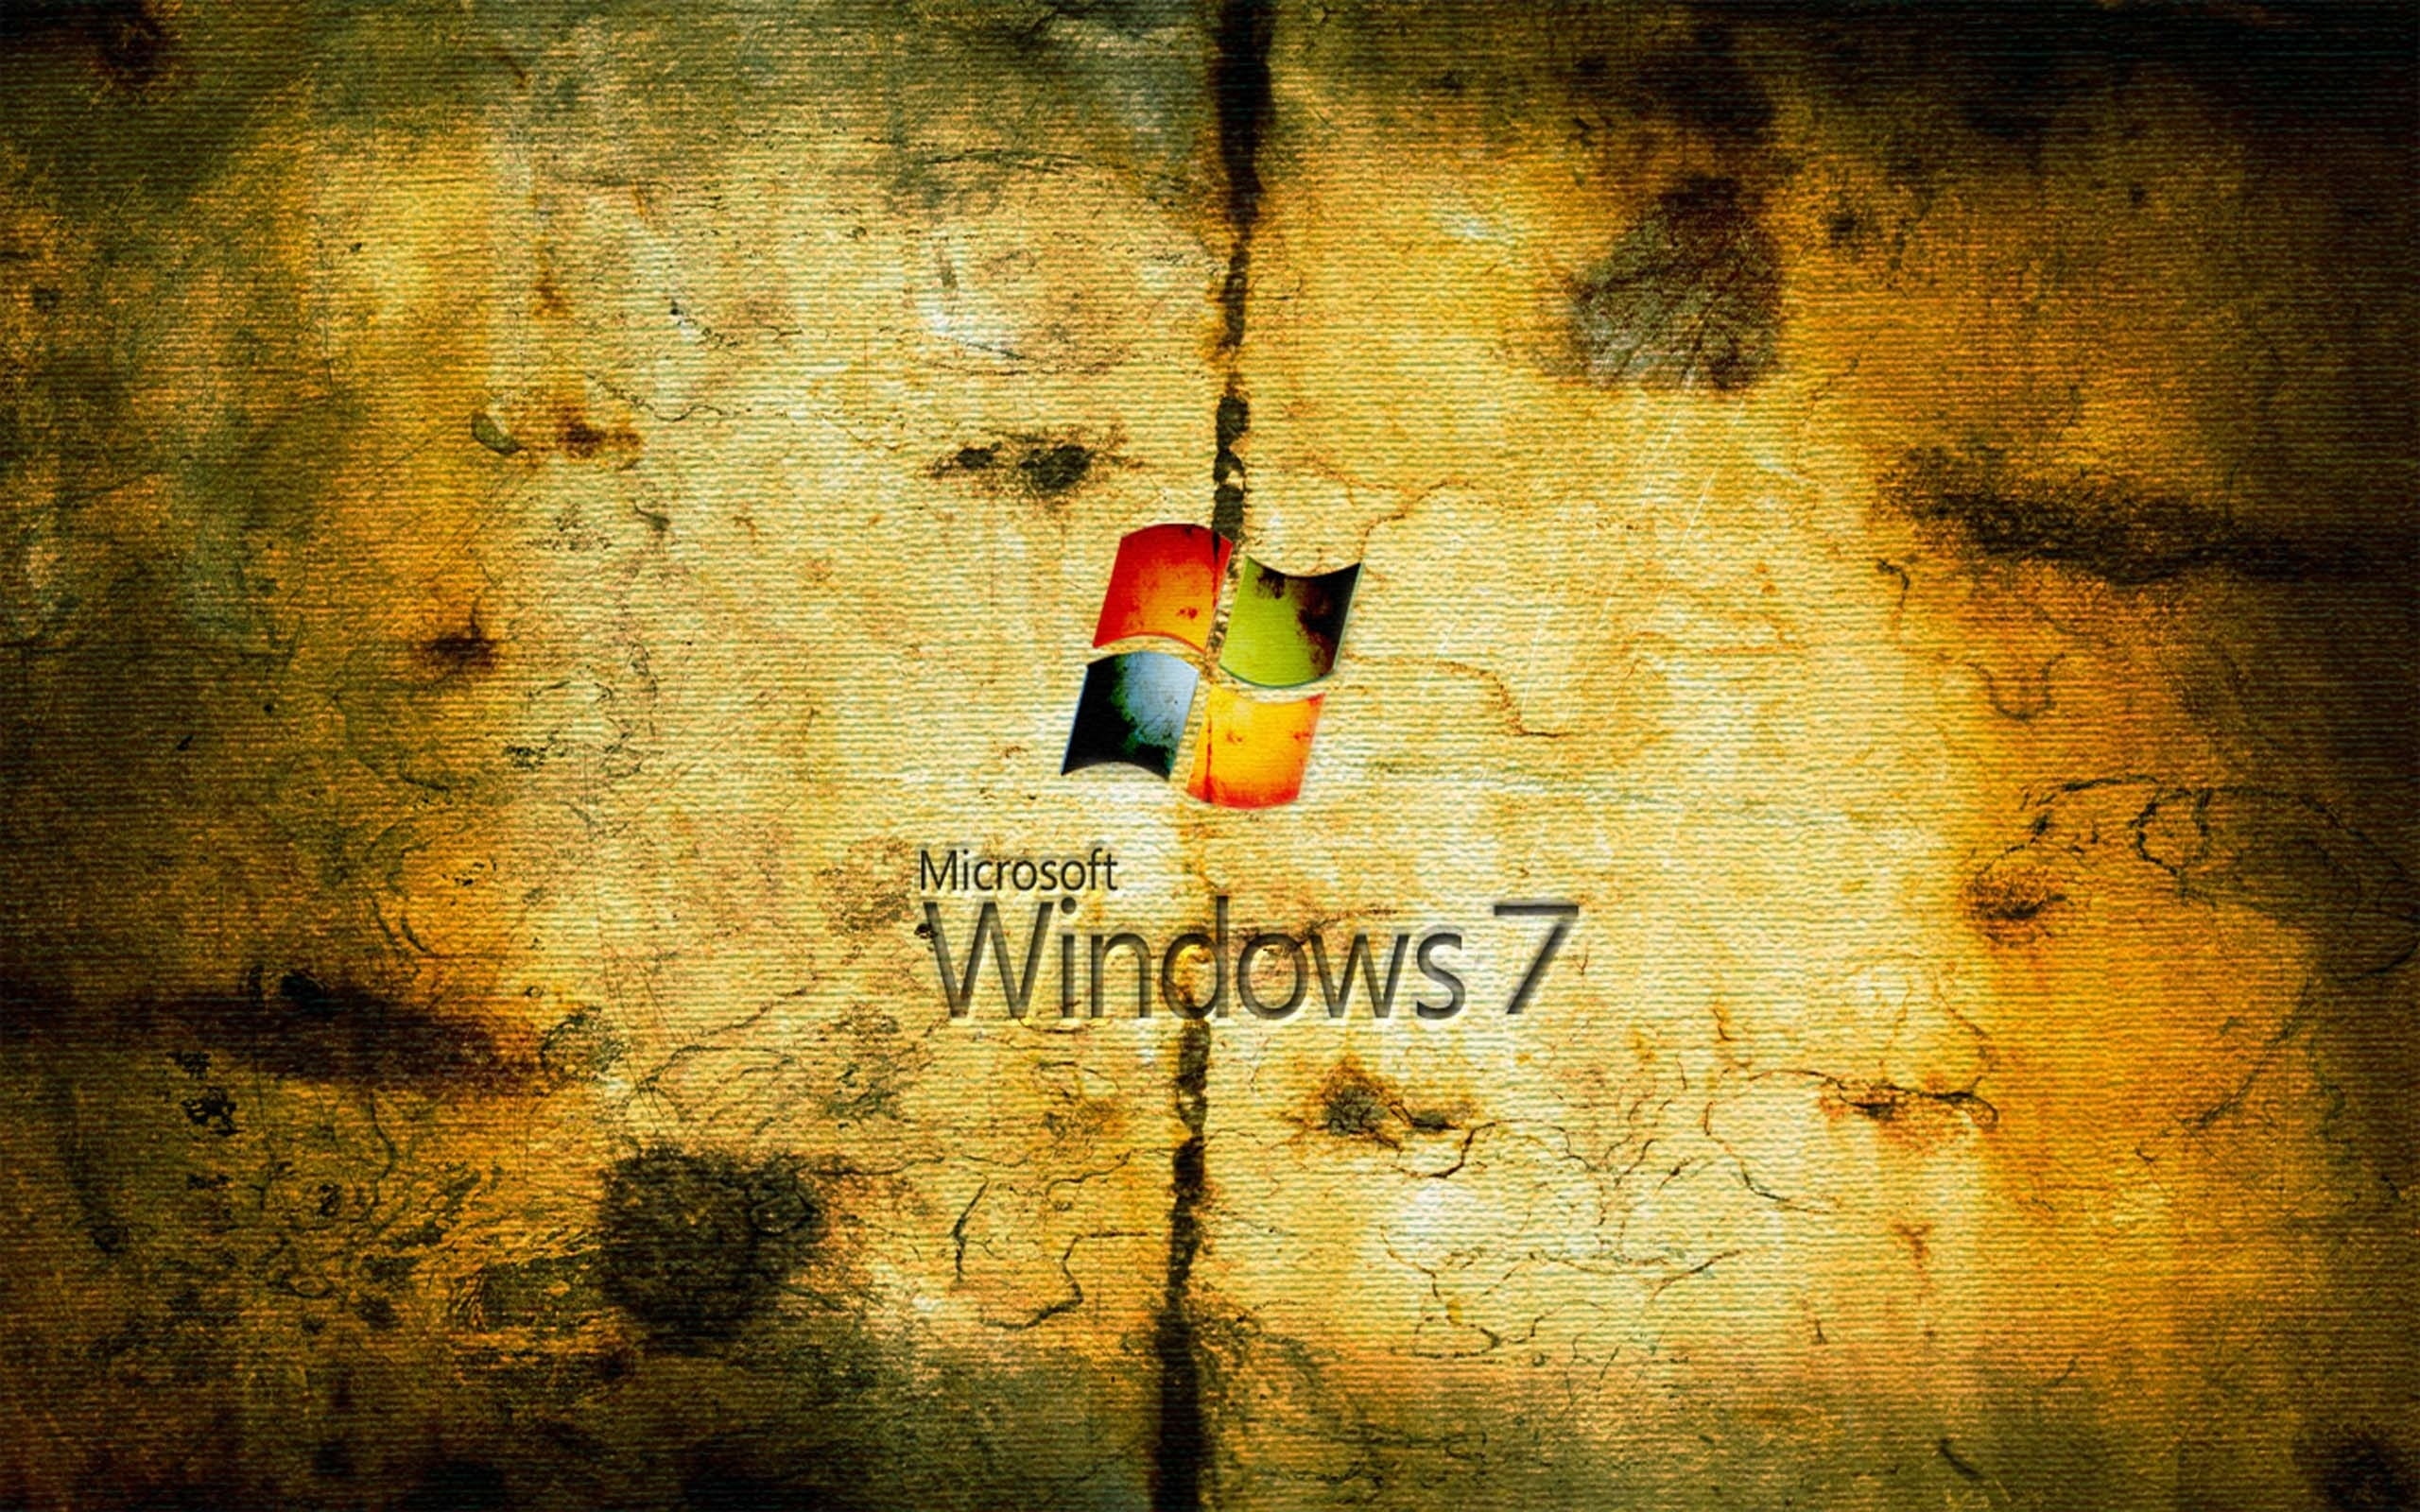 Grungy Windows Seven, microsoft, Windows 7